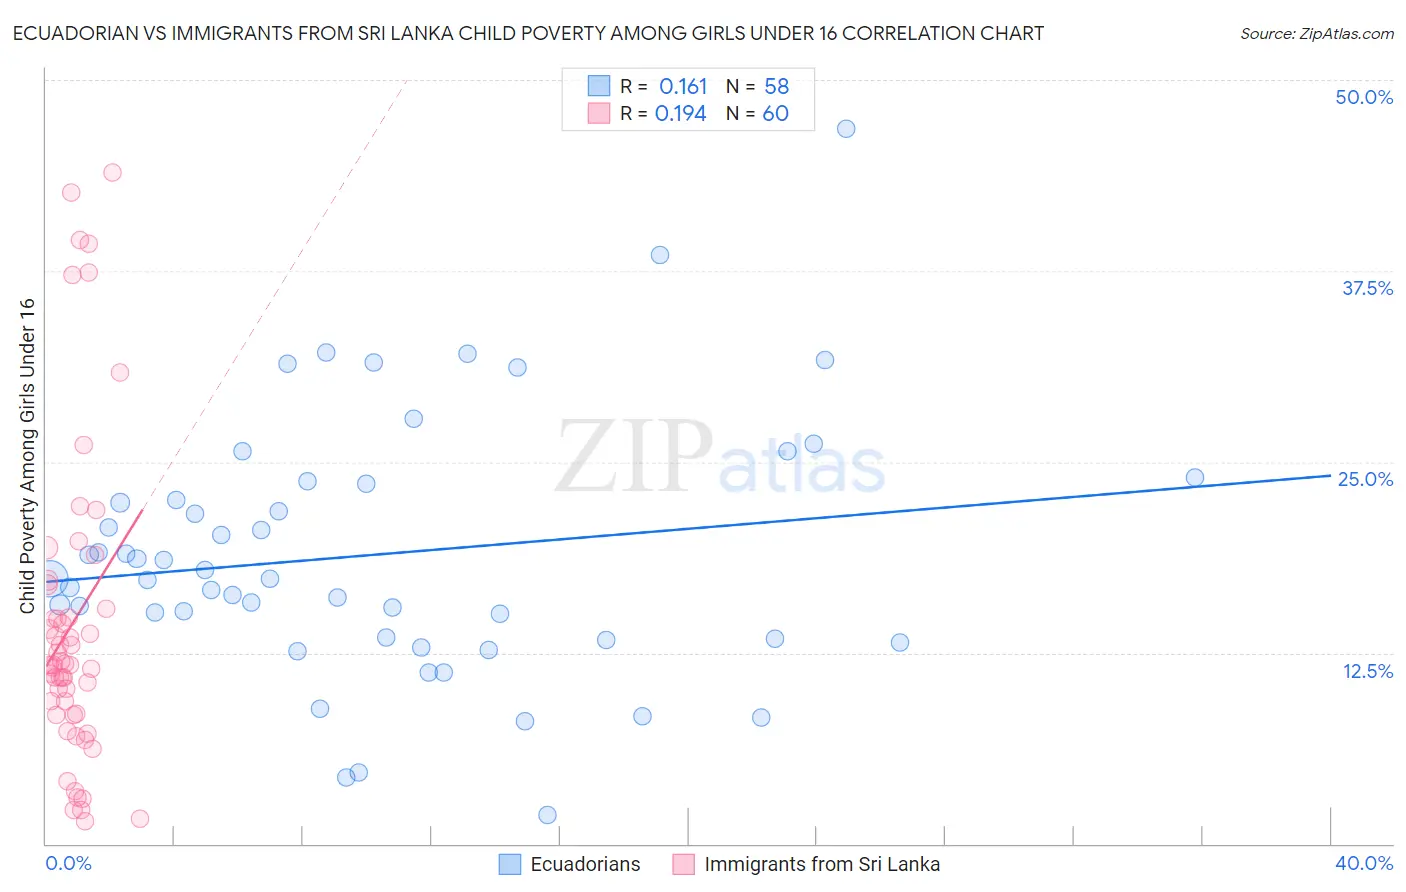 Ecuadorian vs Immigrants from Sri Lanka Child Poverty Among Girls Under 16